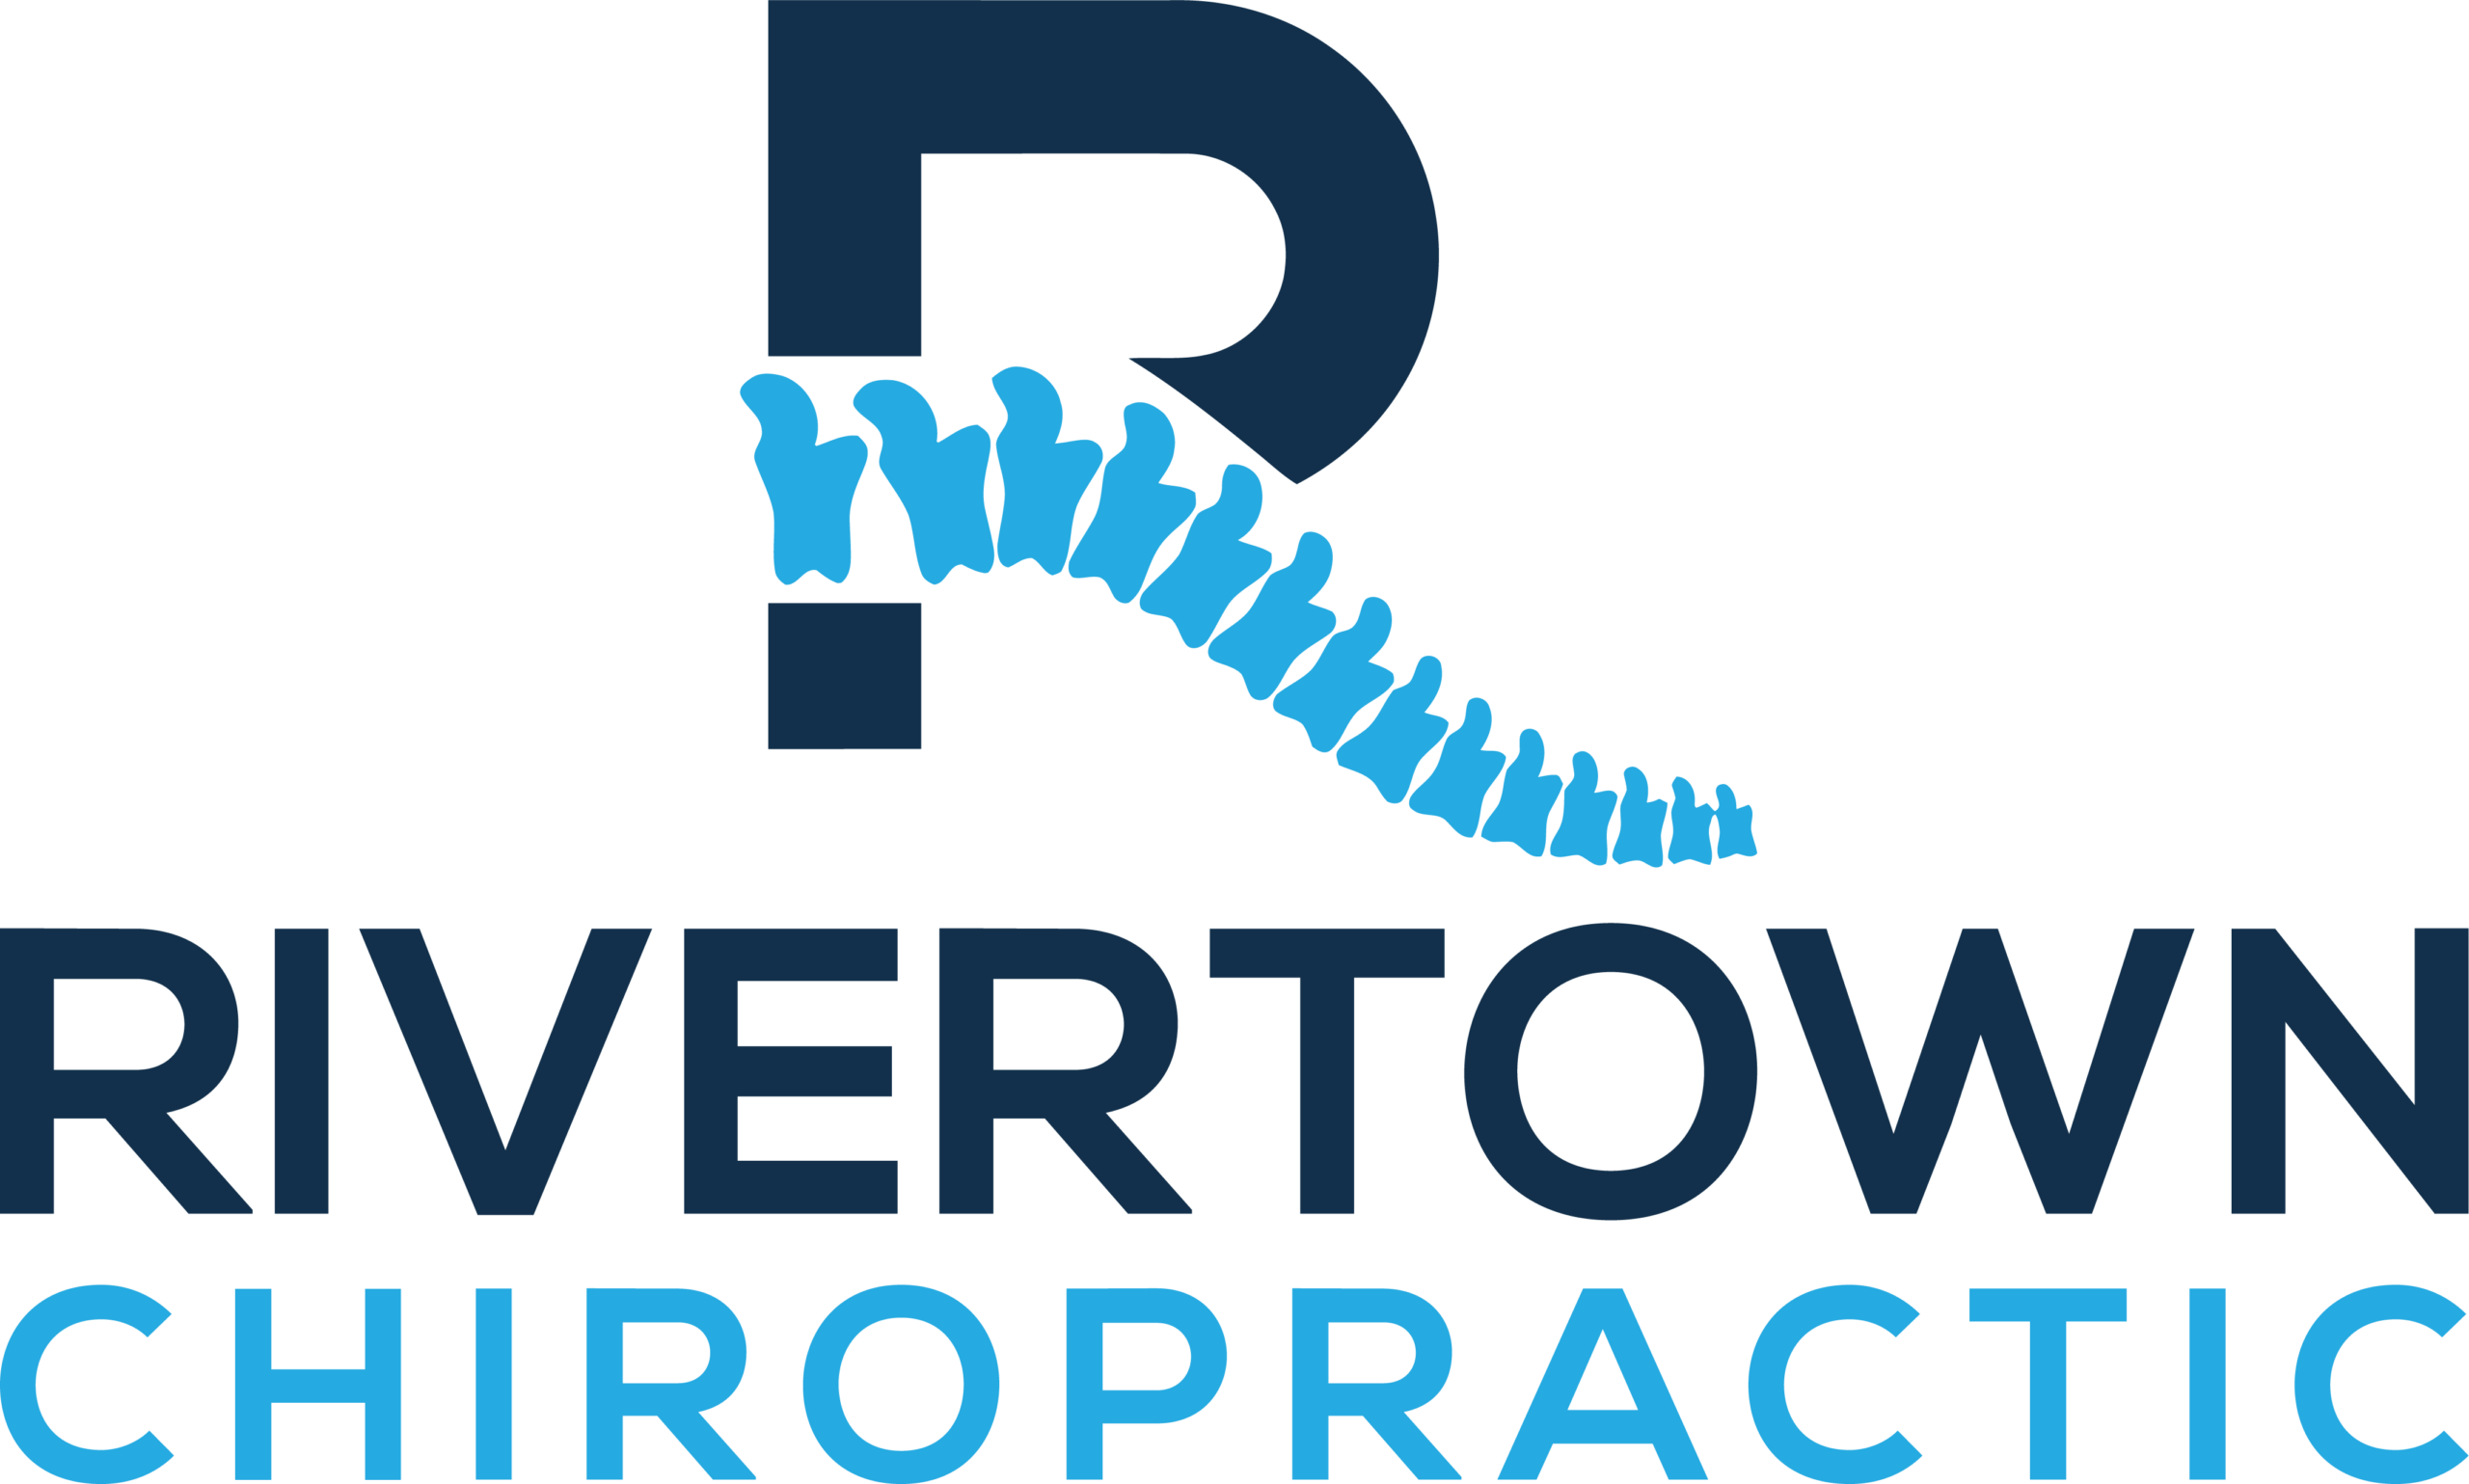 RiverTown Chiropractic